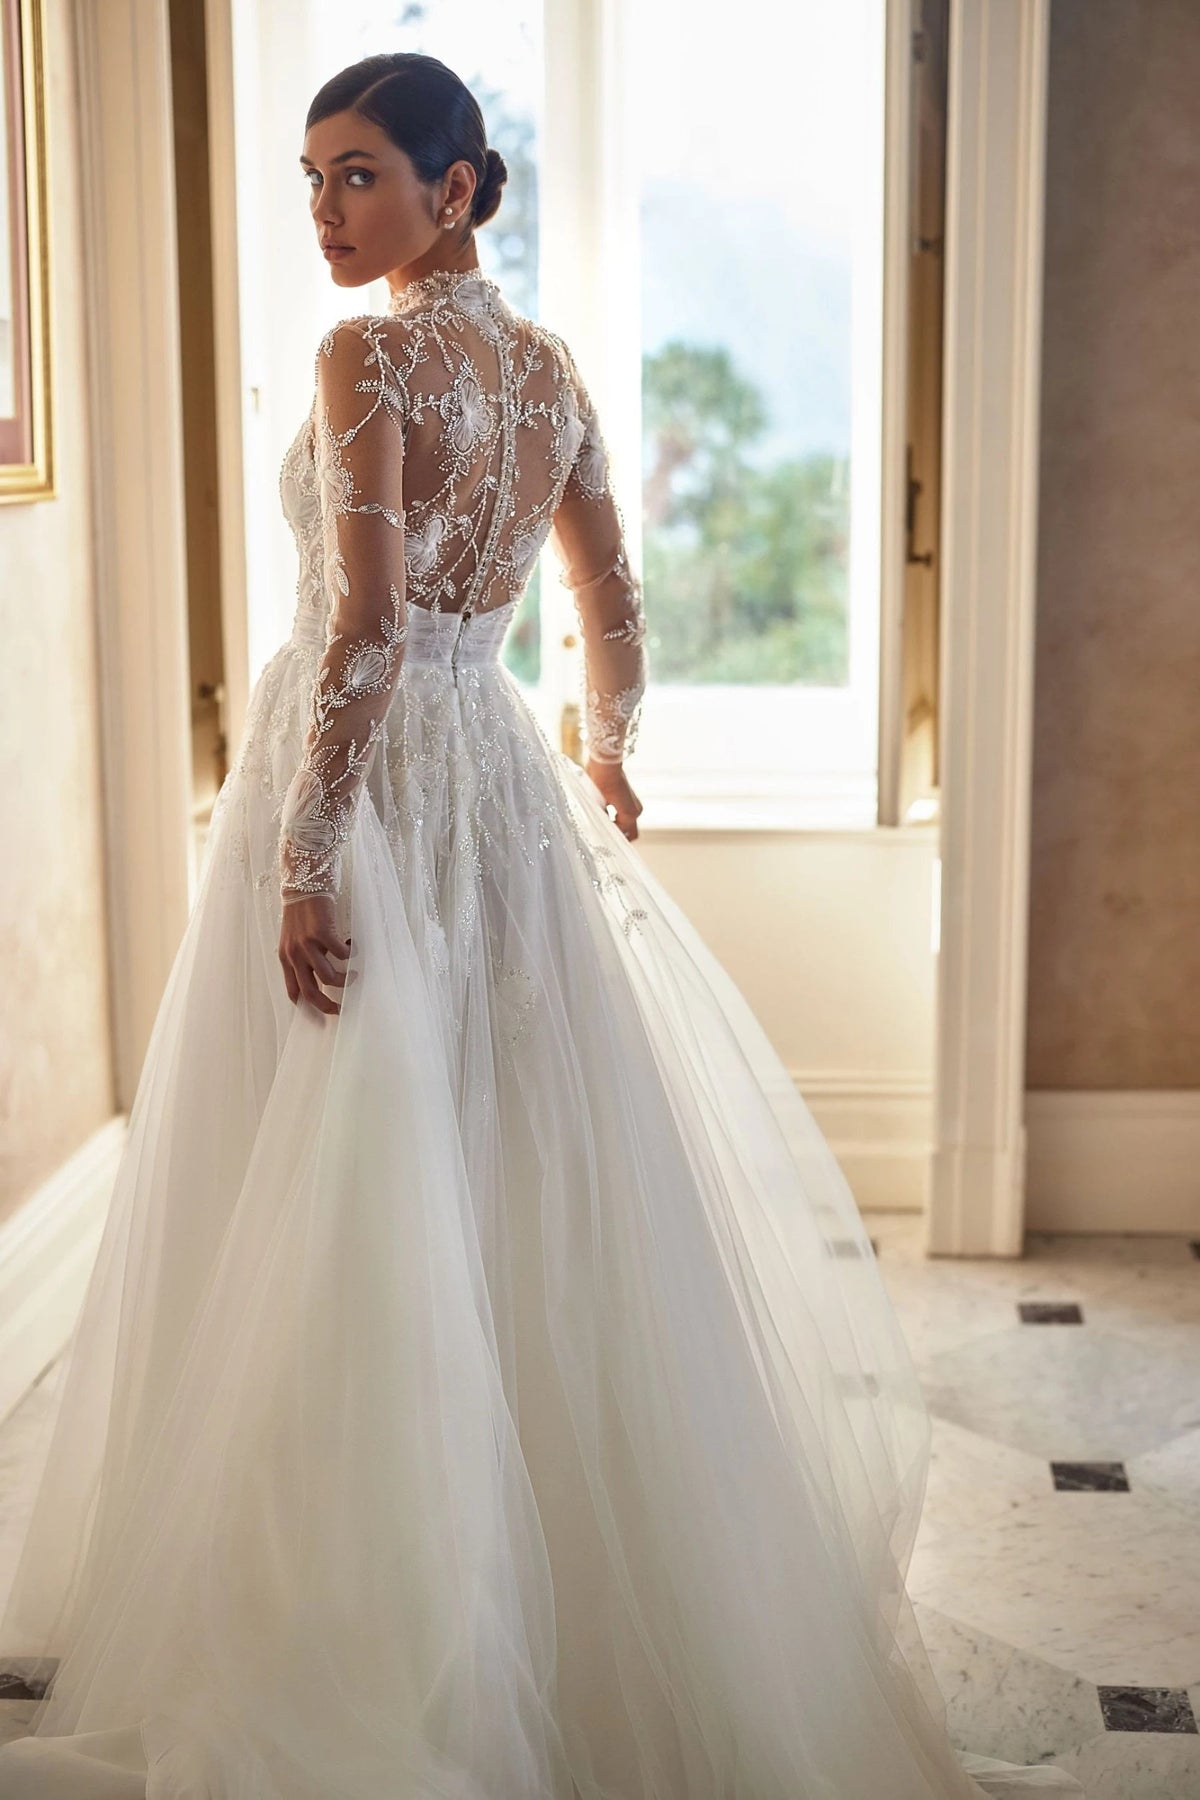 Stunning Aline Long Illusion Sleeves Embroidered Flowers Semi Transparent Bodice Deep V Neckline High Collar Wedding Dress Bridal Gown